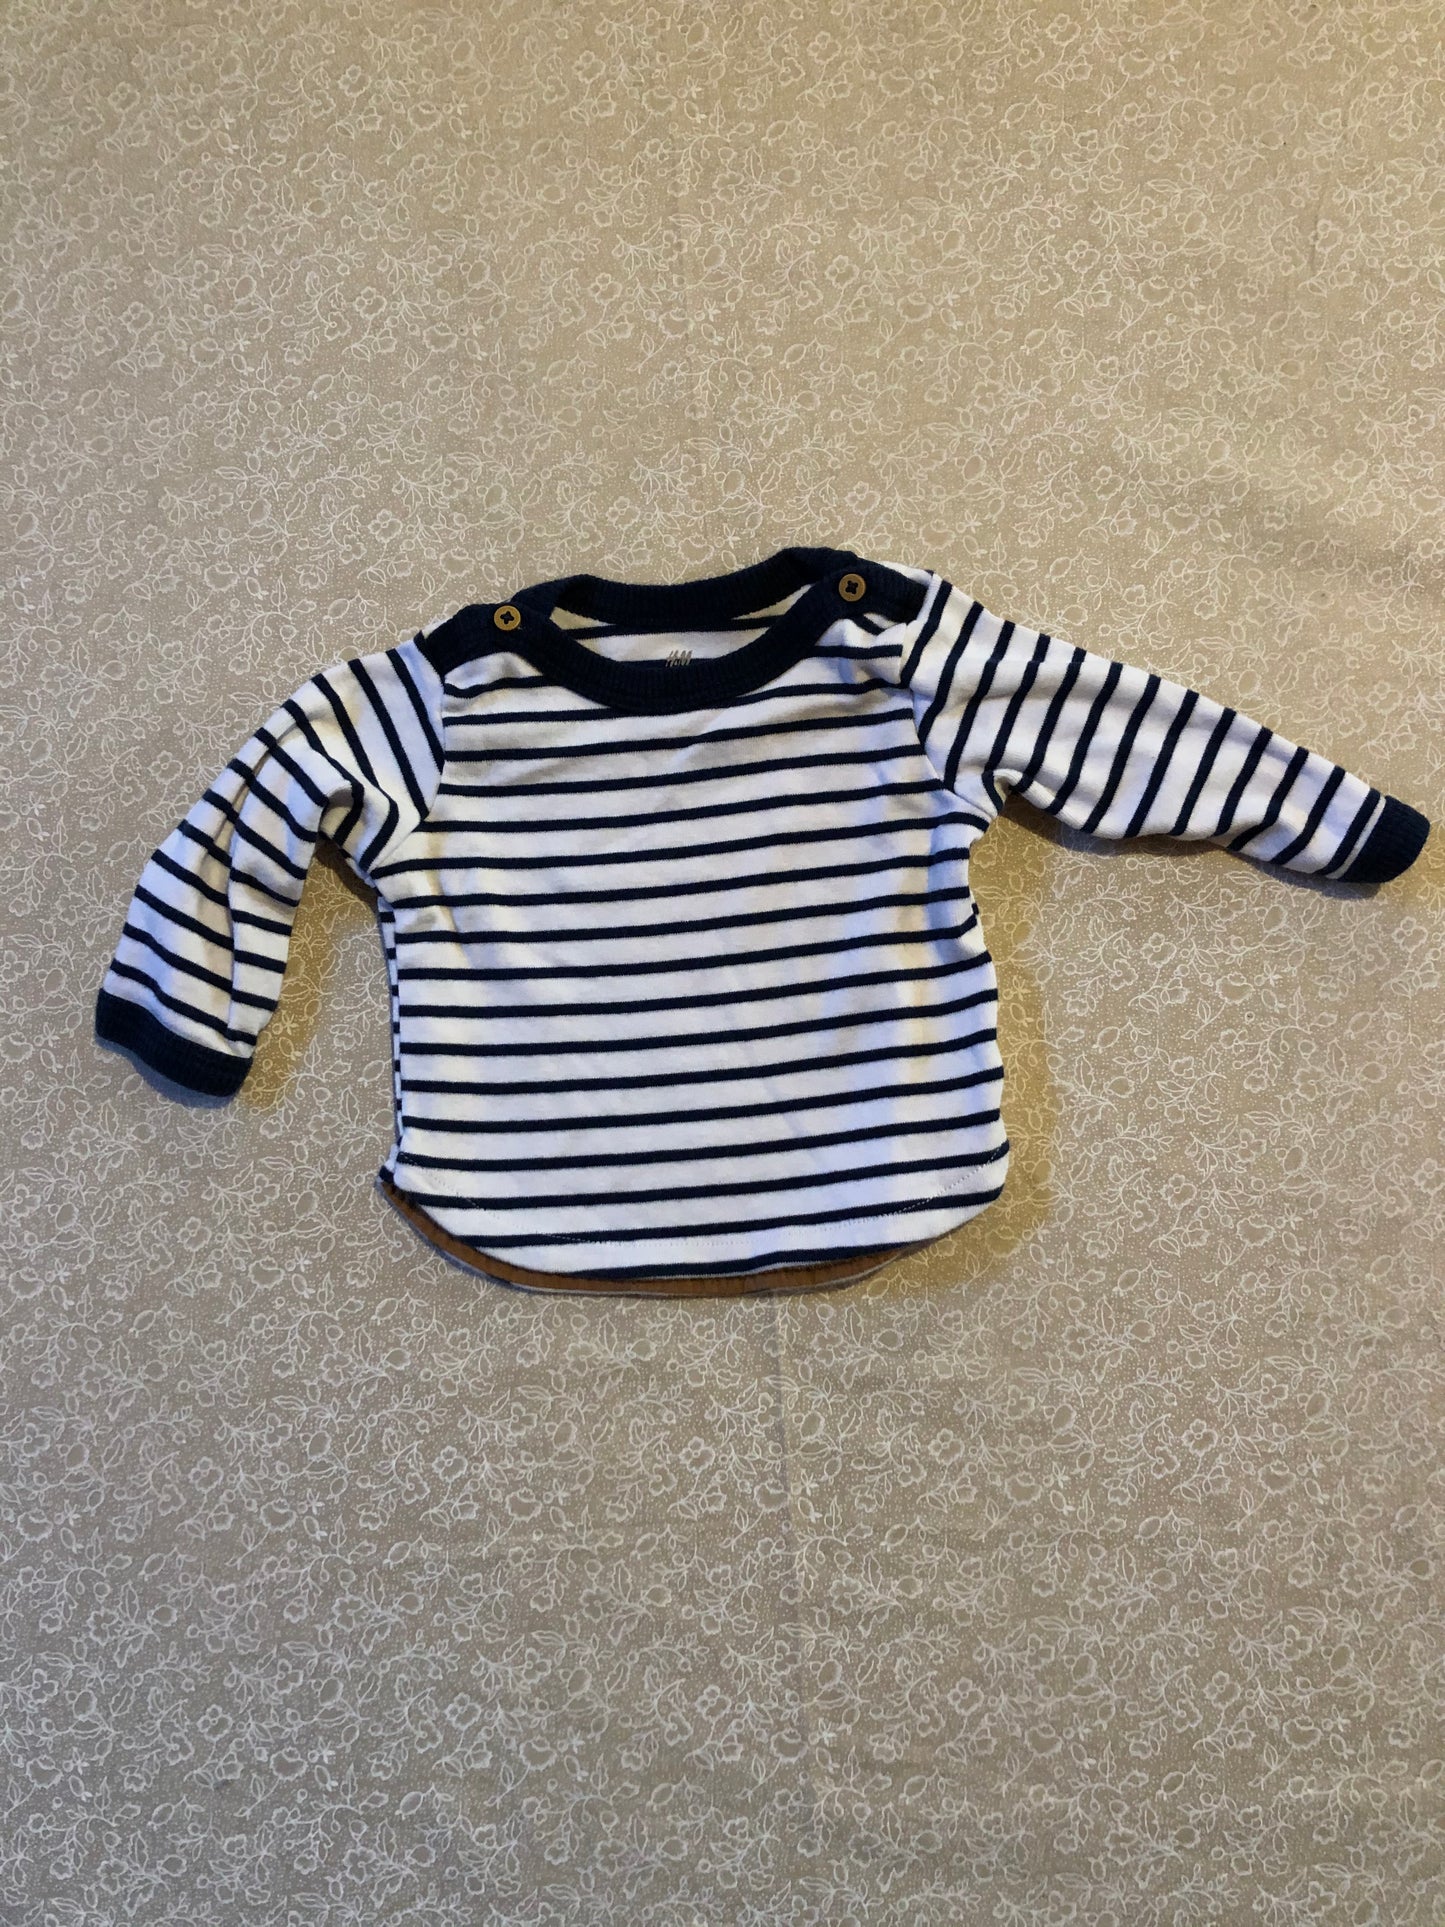 1-2-month-long-sleeve-shirt-hm-white-blue-stripes